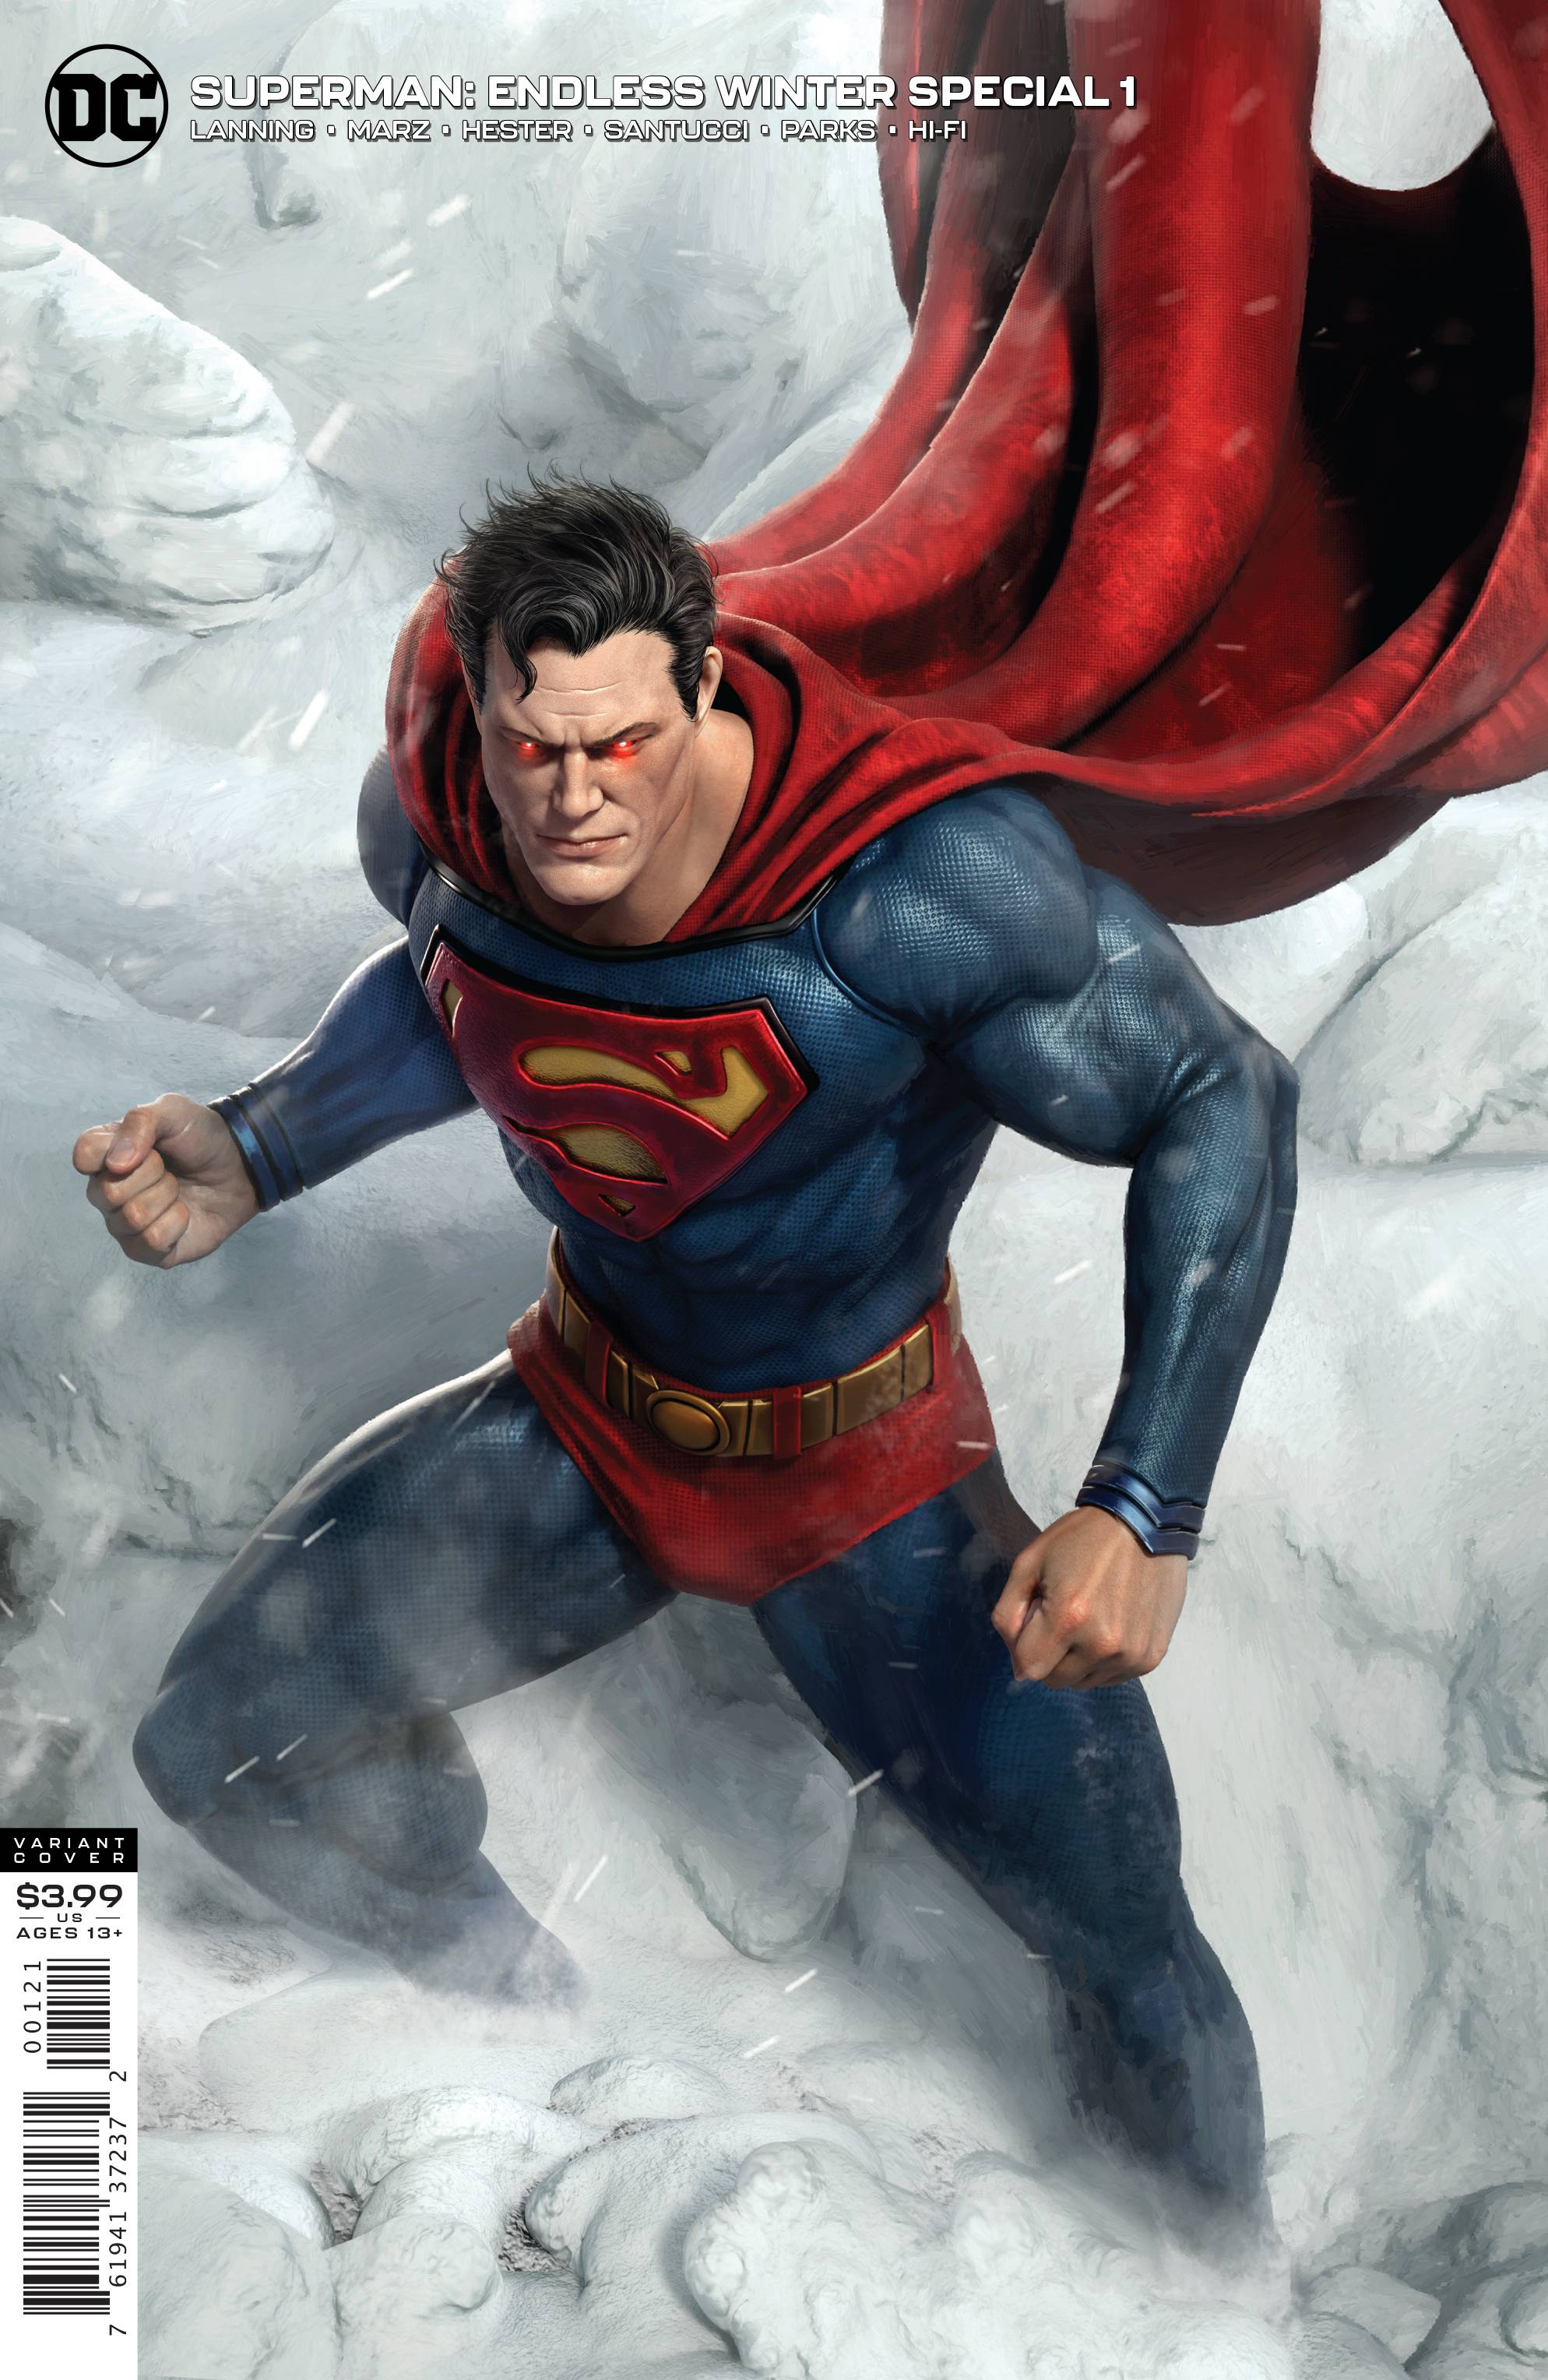 SUPERMAN ENDLESS WINTER SPECIAL #1 VAR ED